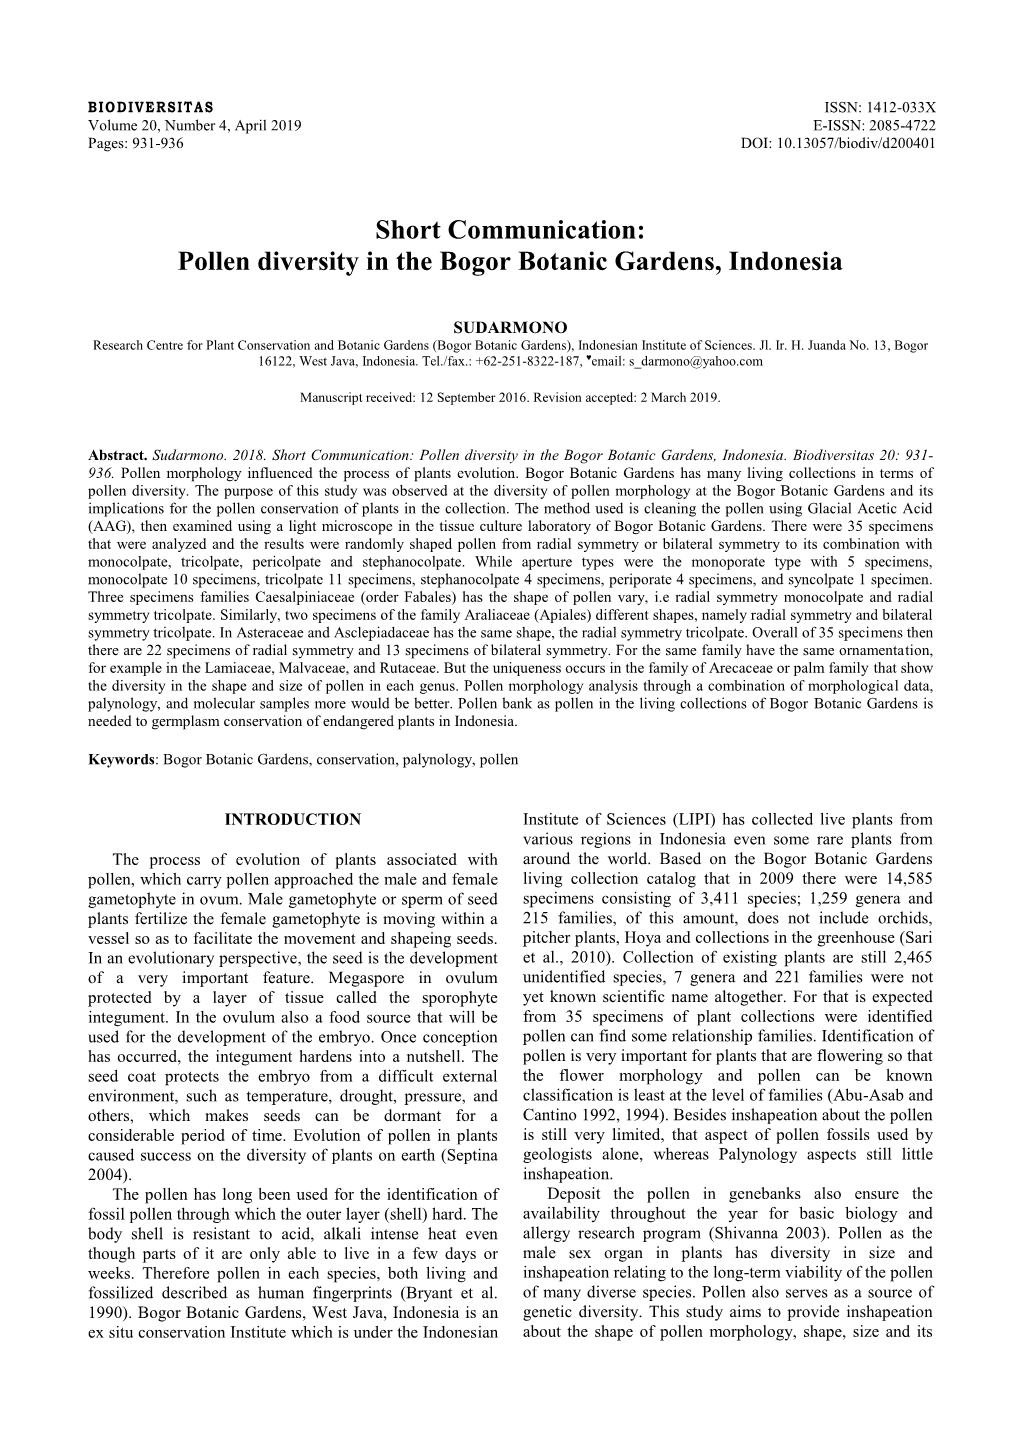 Pollen Diversity in the Bogor Botanic Gardens, Indonesia